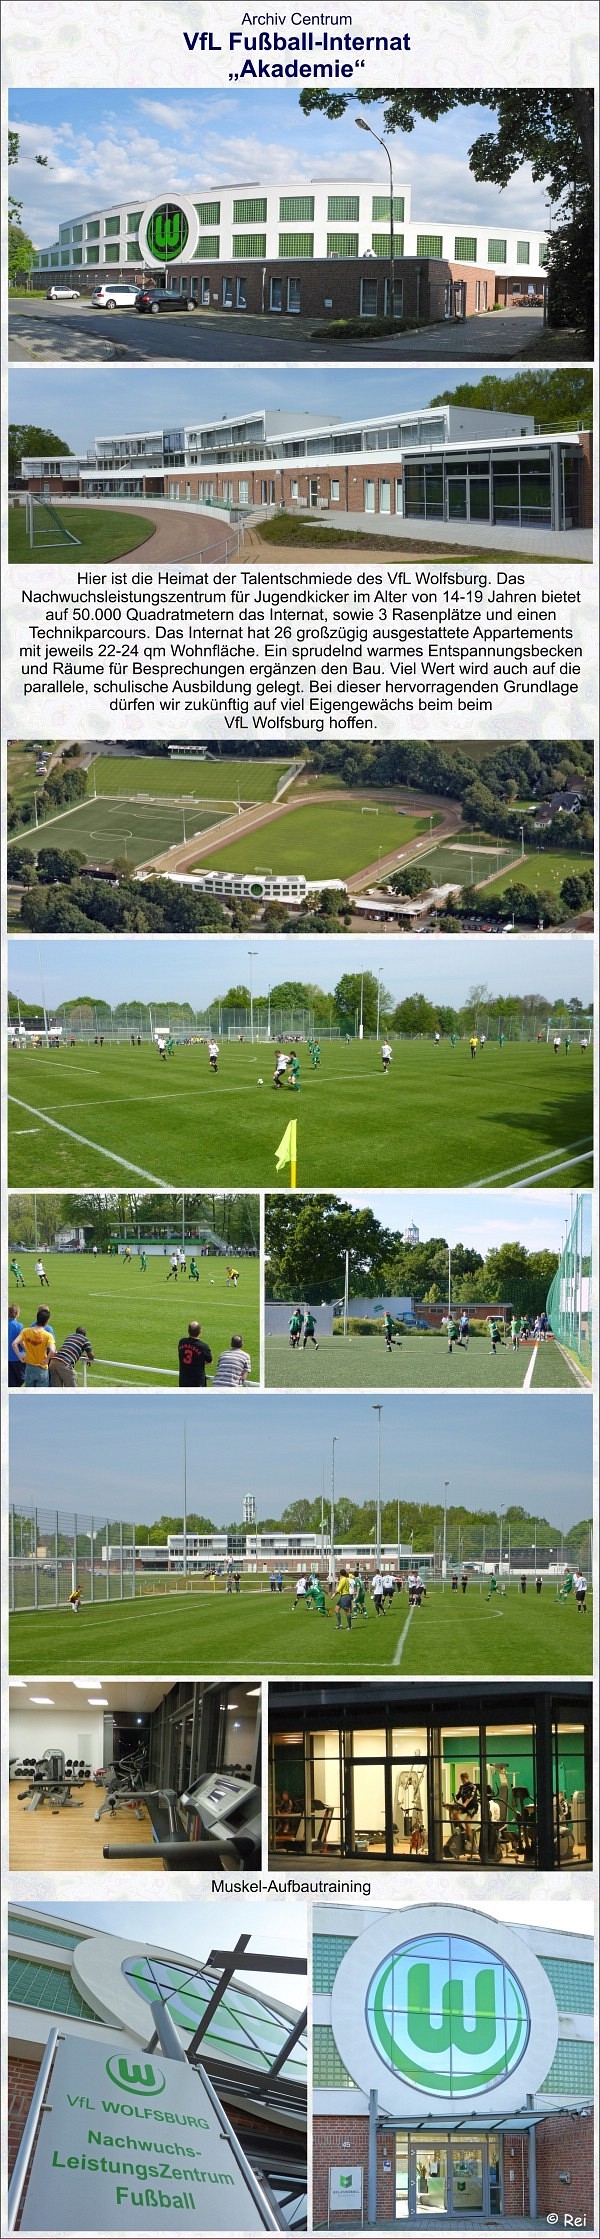 VfL Wolfsburg Fussball-Internat - Akademie